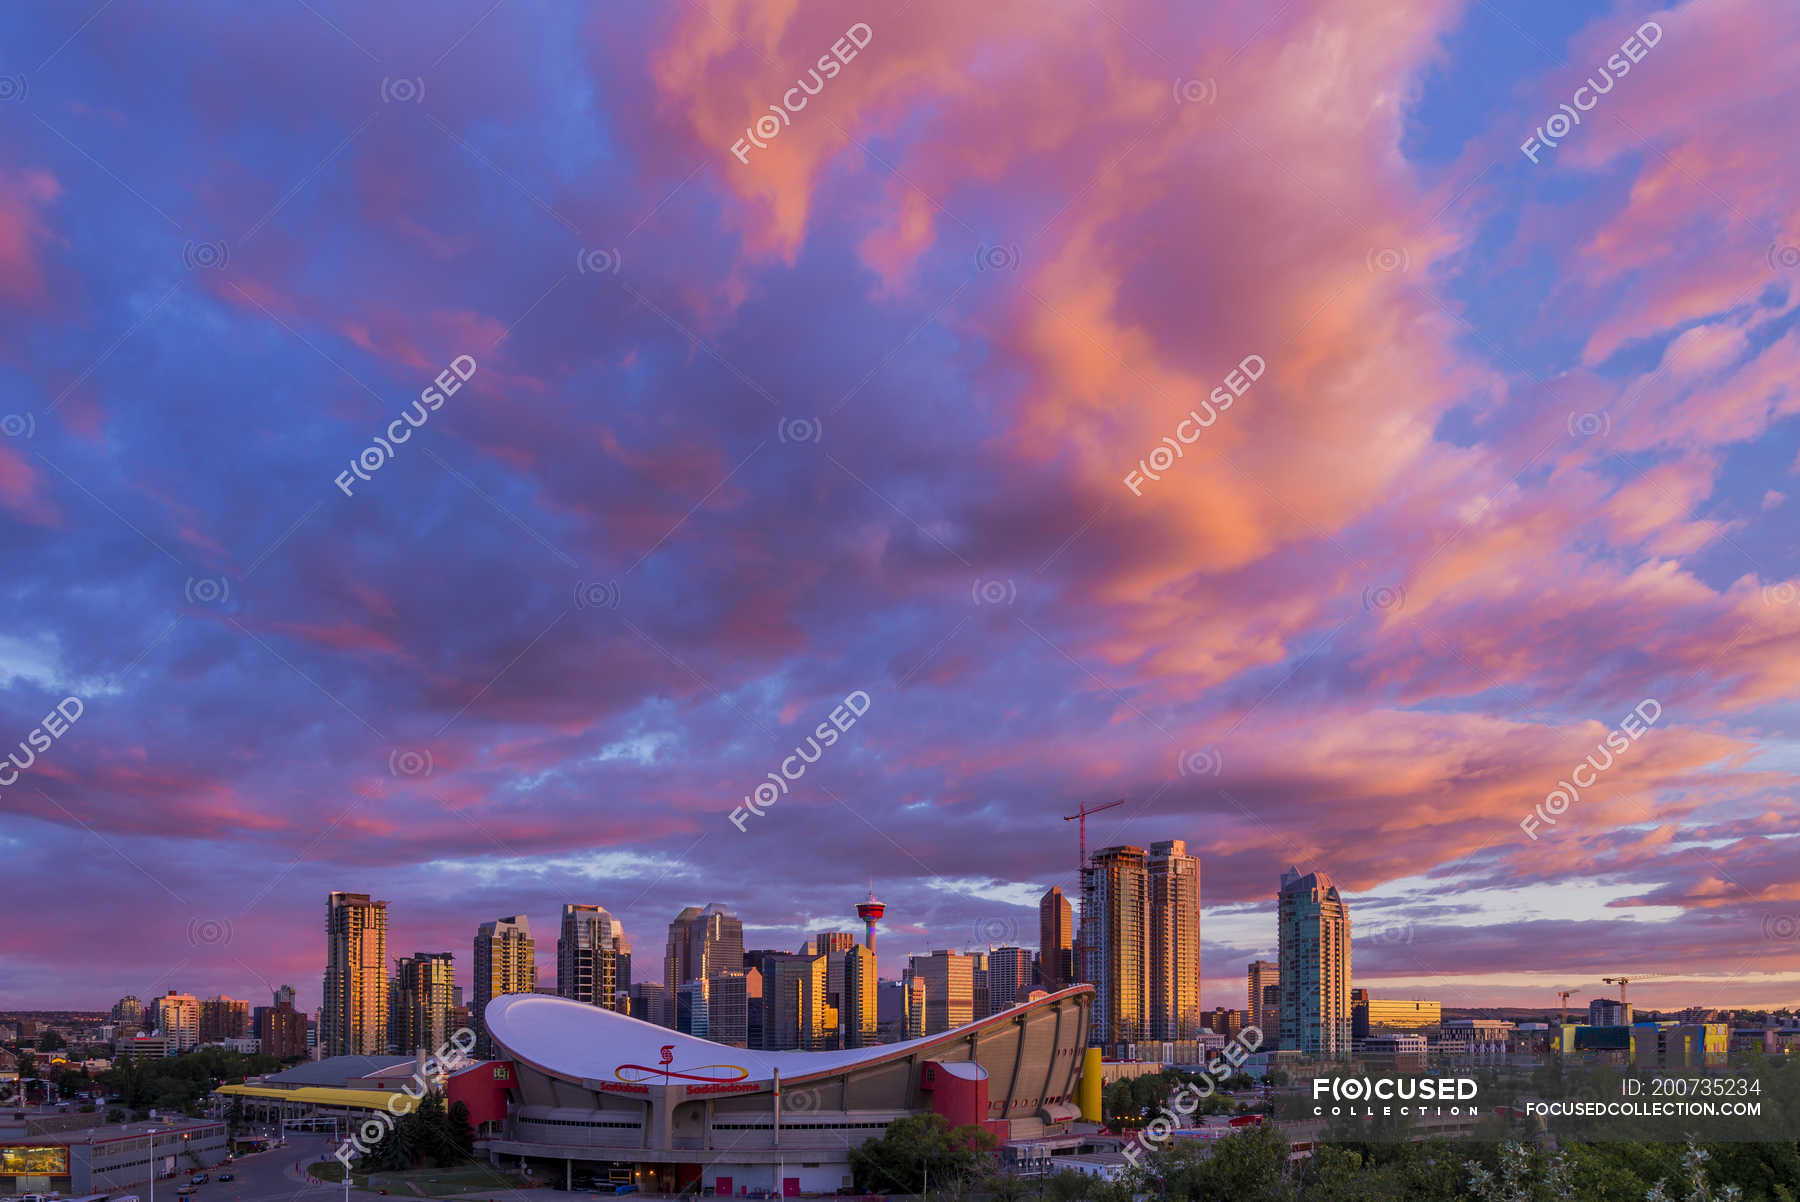 Saddledome arena and city skyline under dramatic sky, Calgary, Alberta